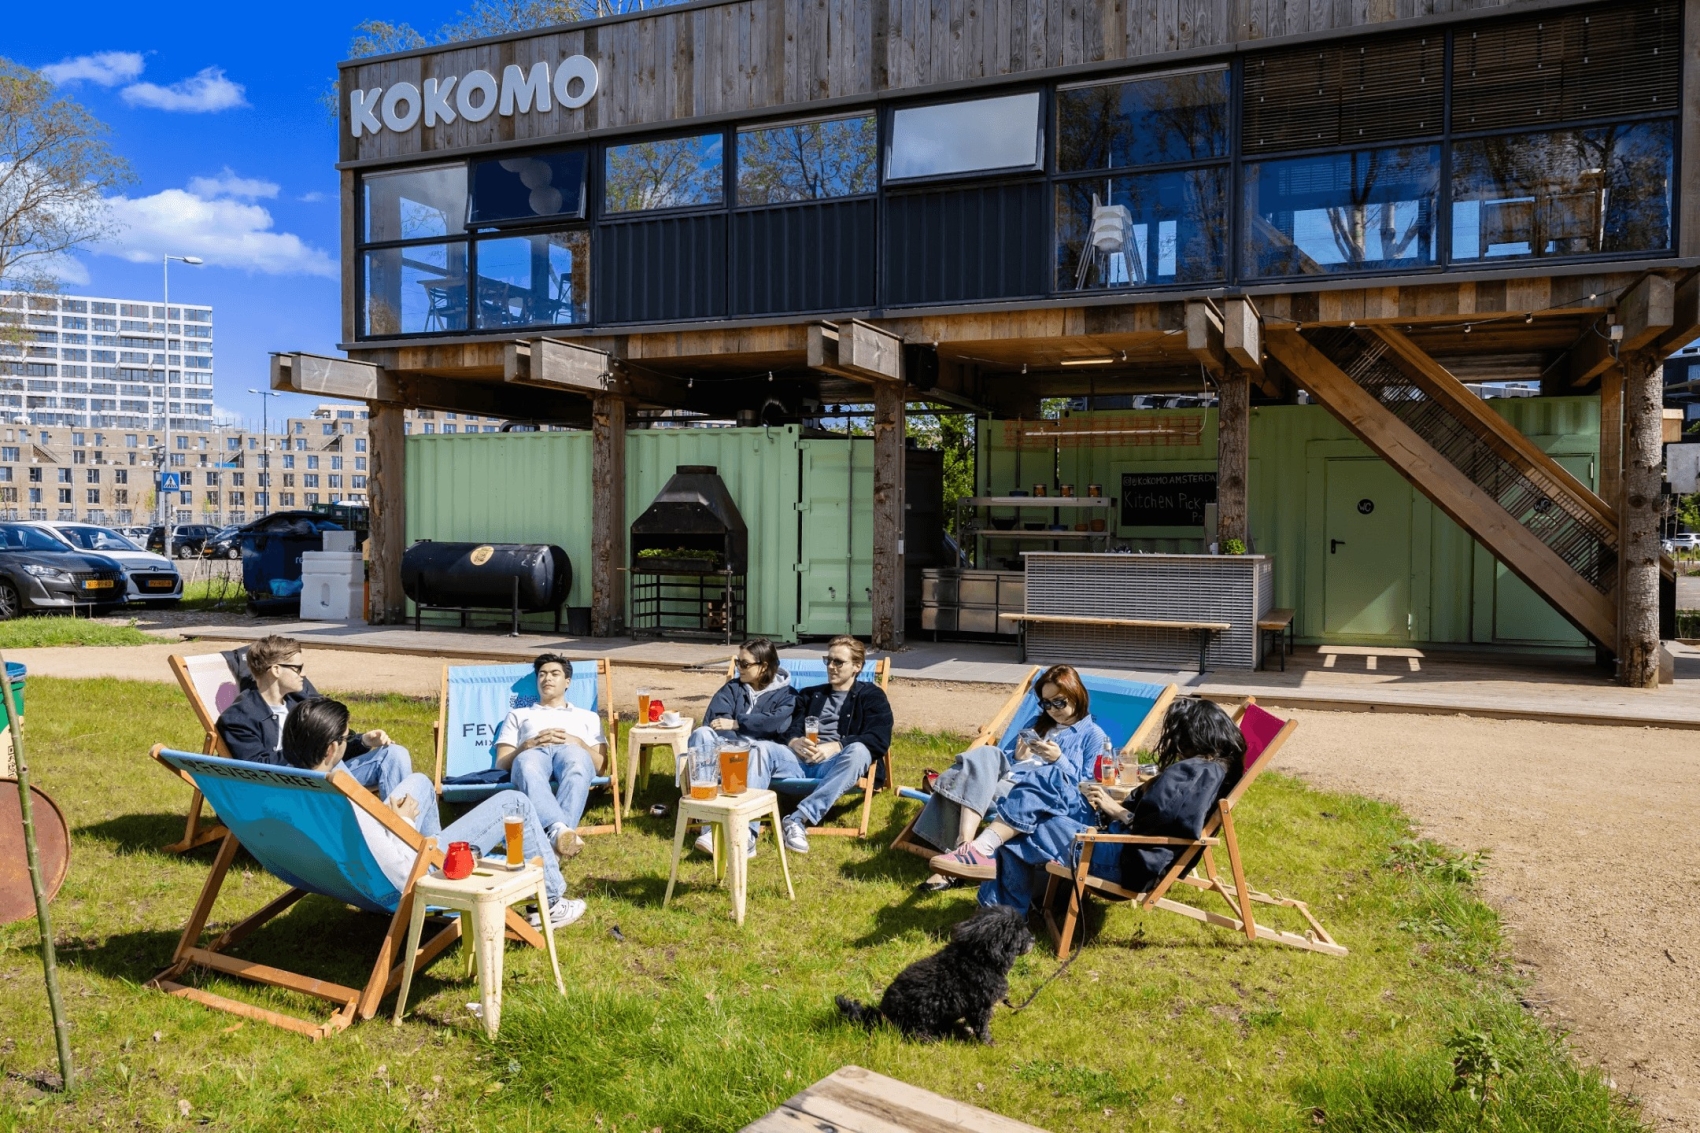 Stadtstrand Kokomo am Zeeburgereiland eröffnet